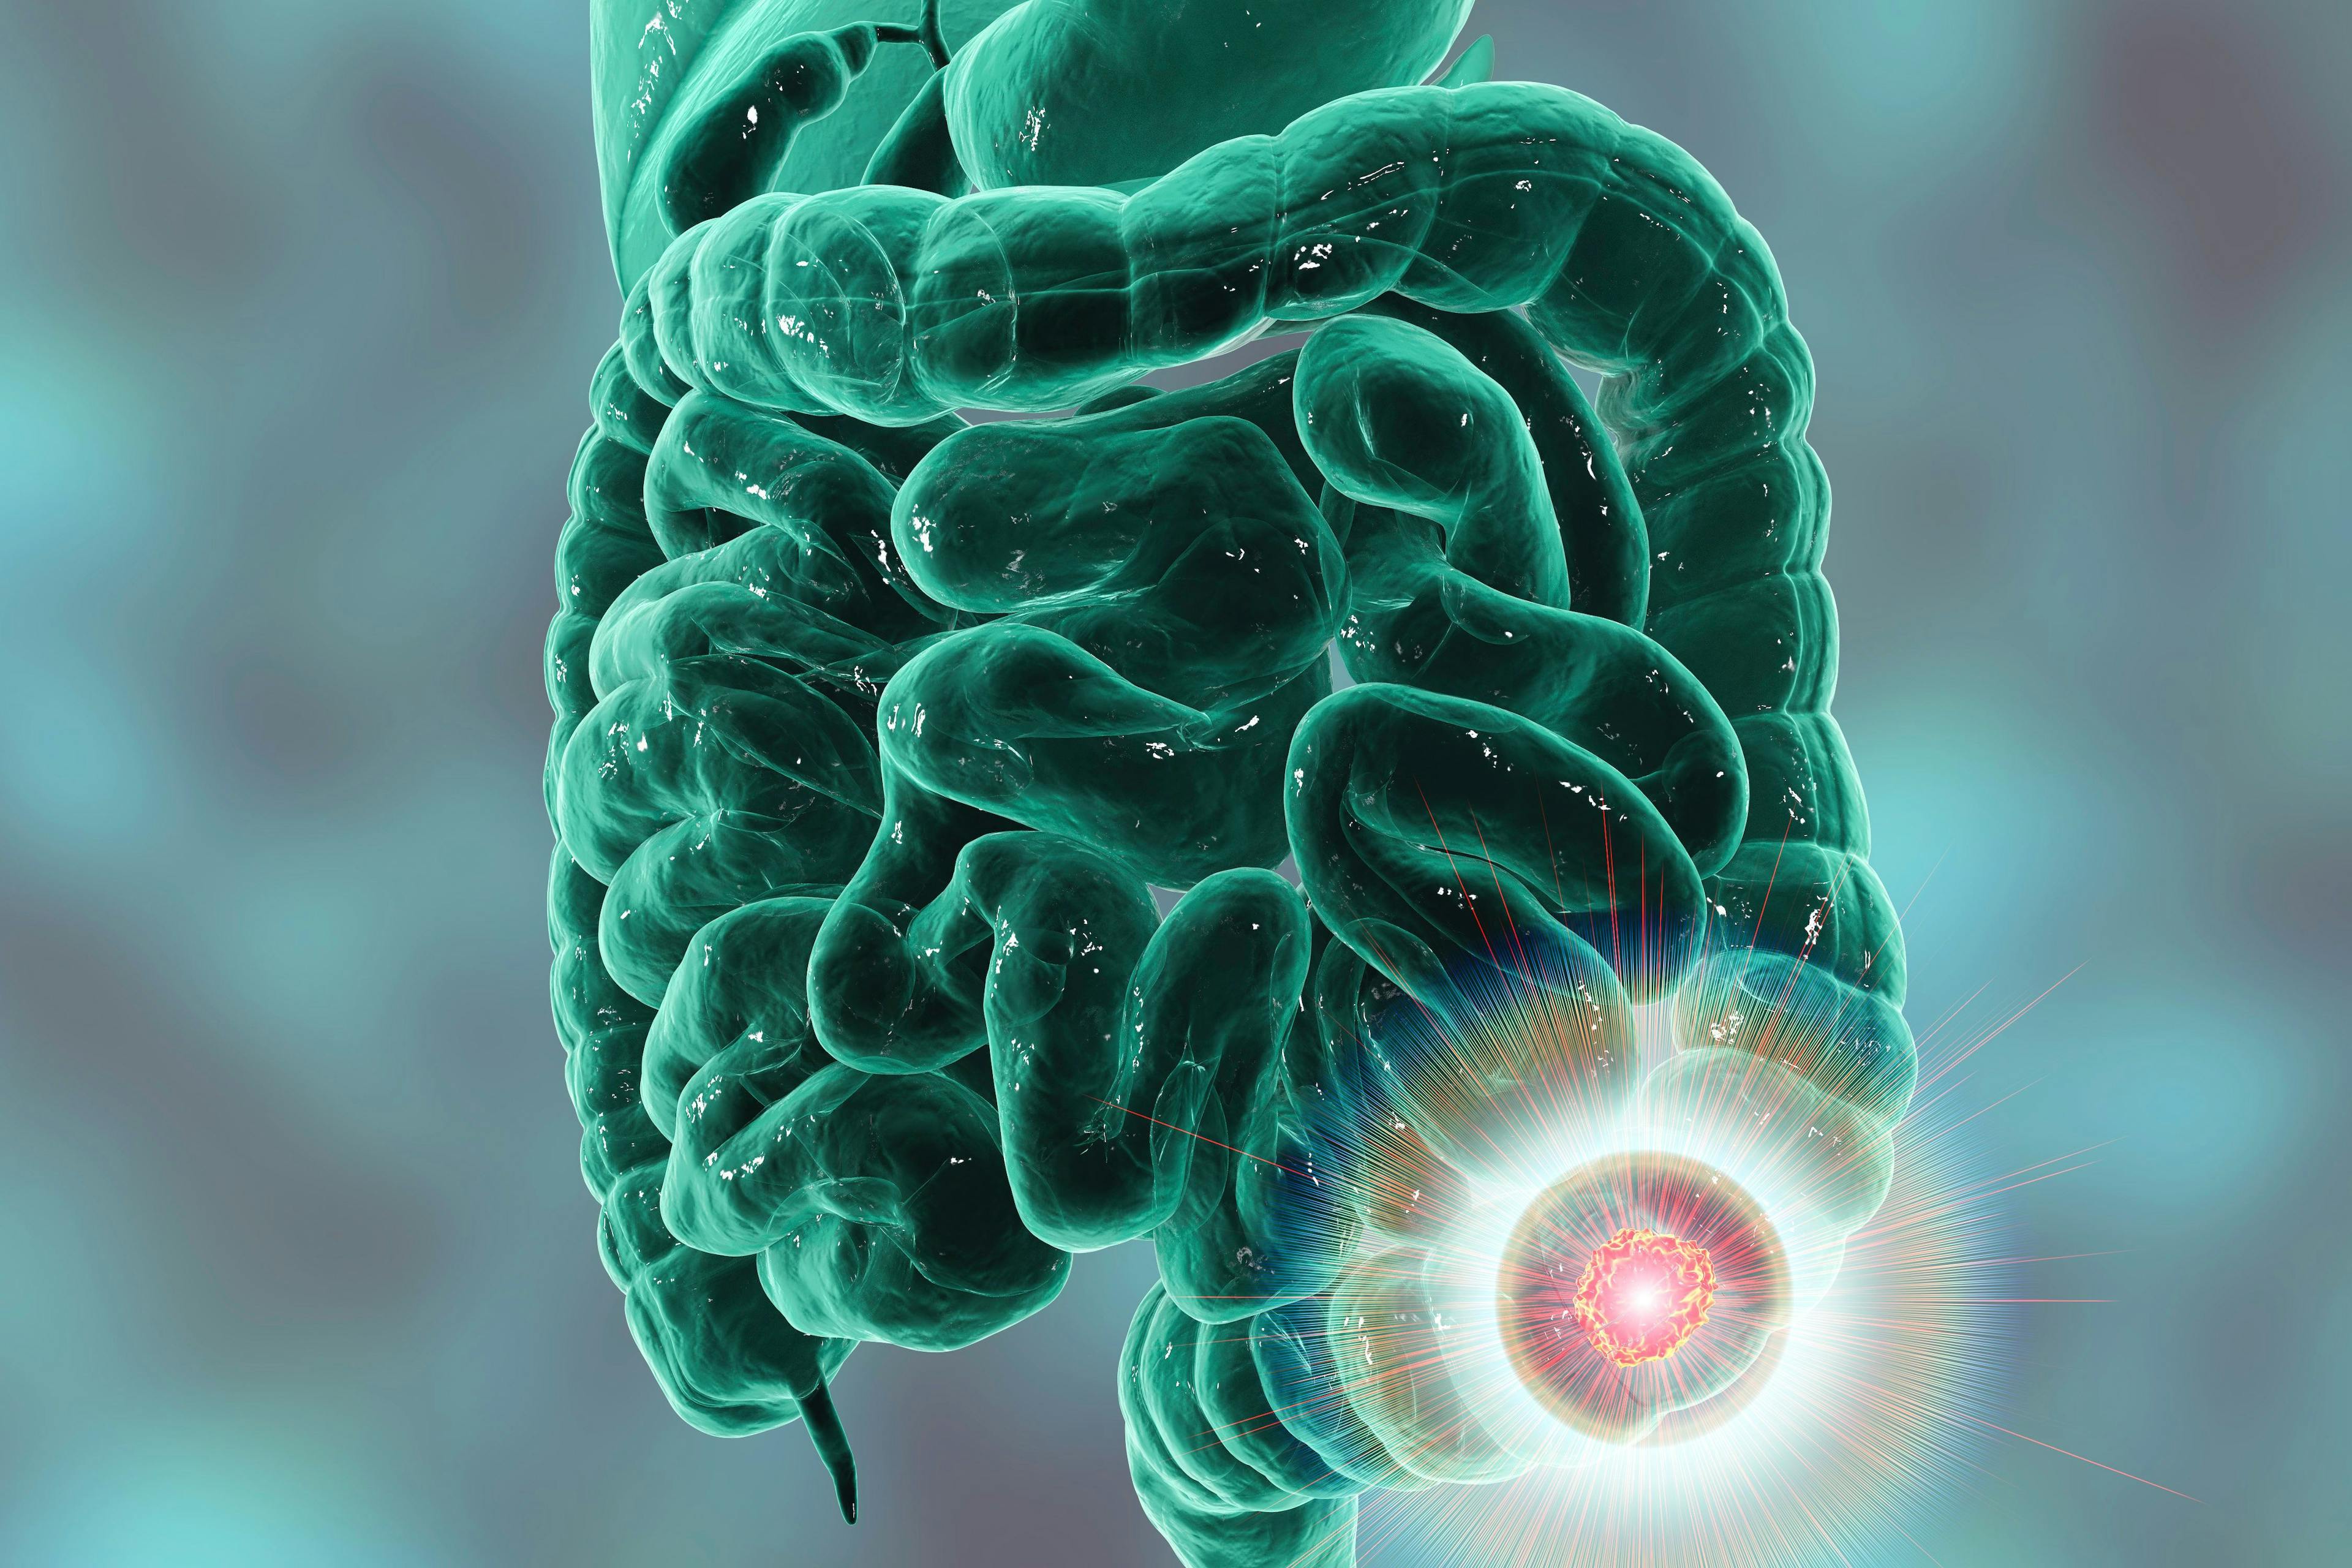 Colorectal Cancer, 3D Illustration | Image credit: Dr_Microbe - stock.adobe.com